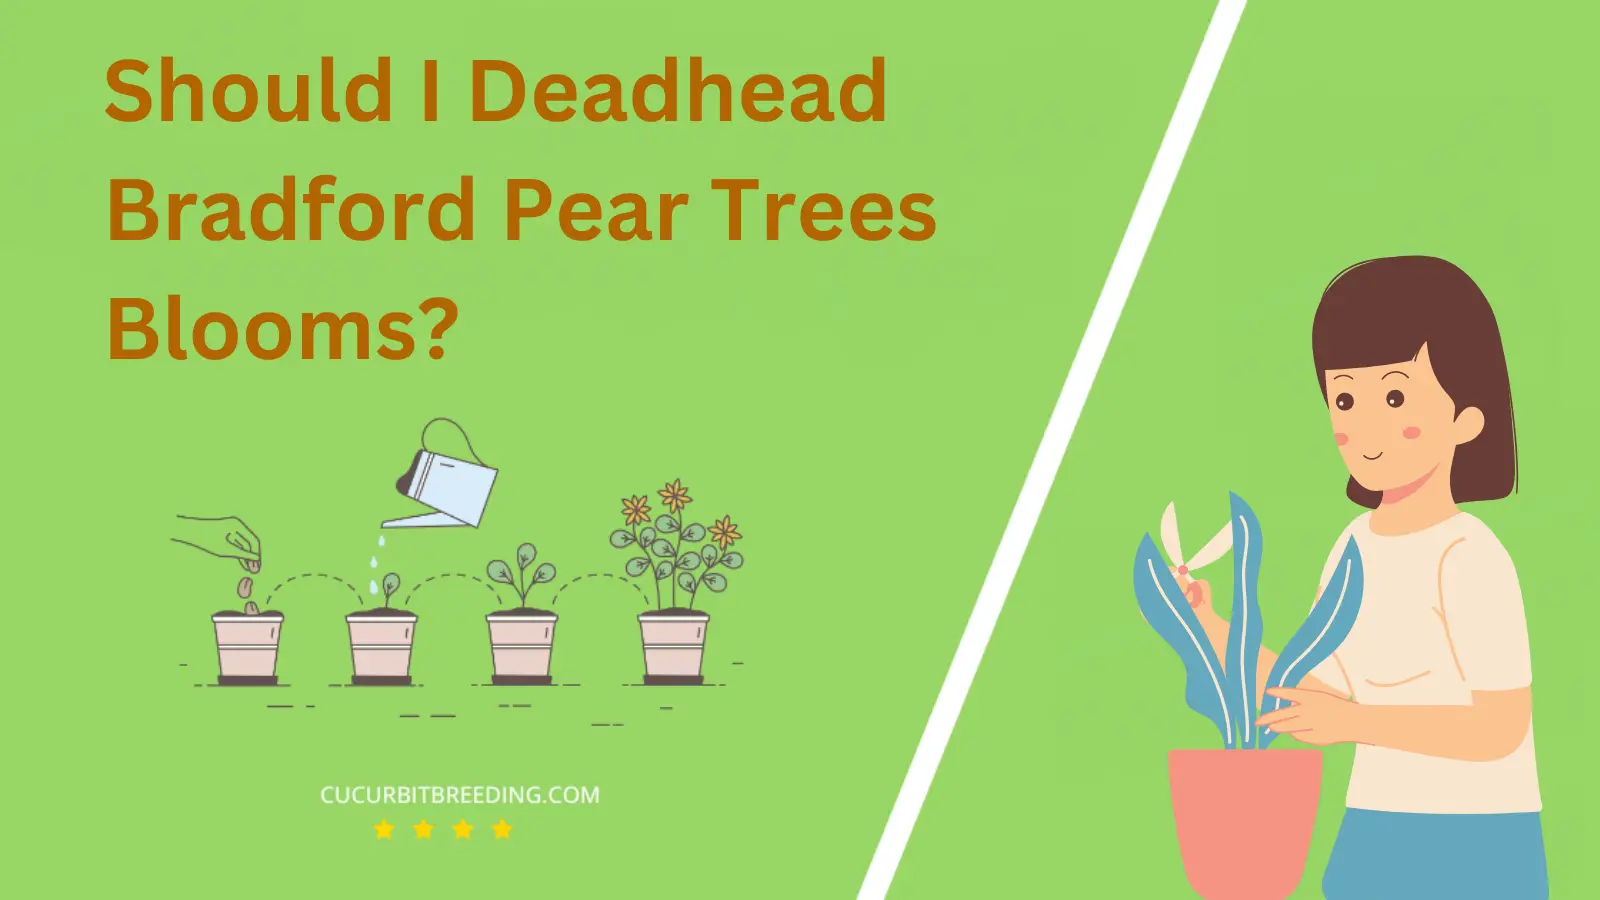 Should I Deadhead Bradford Pear Trees Blooms?